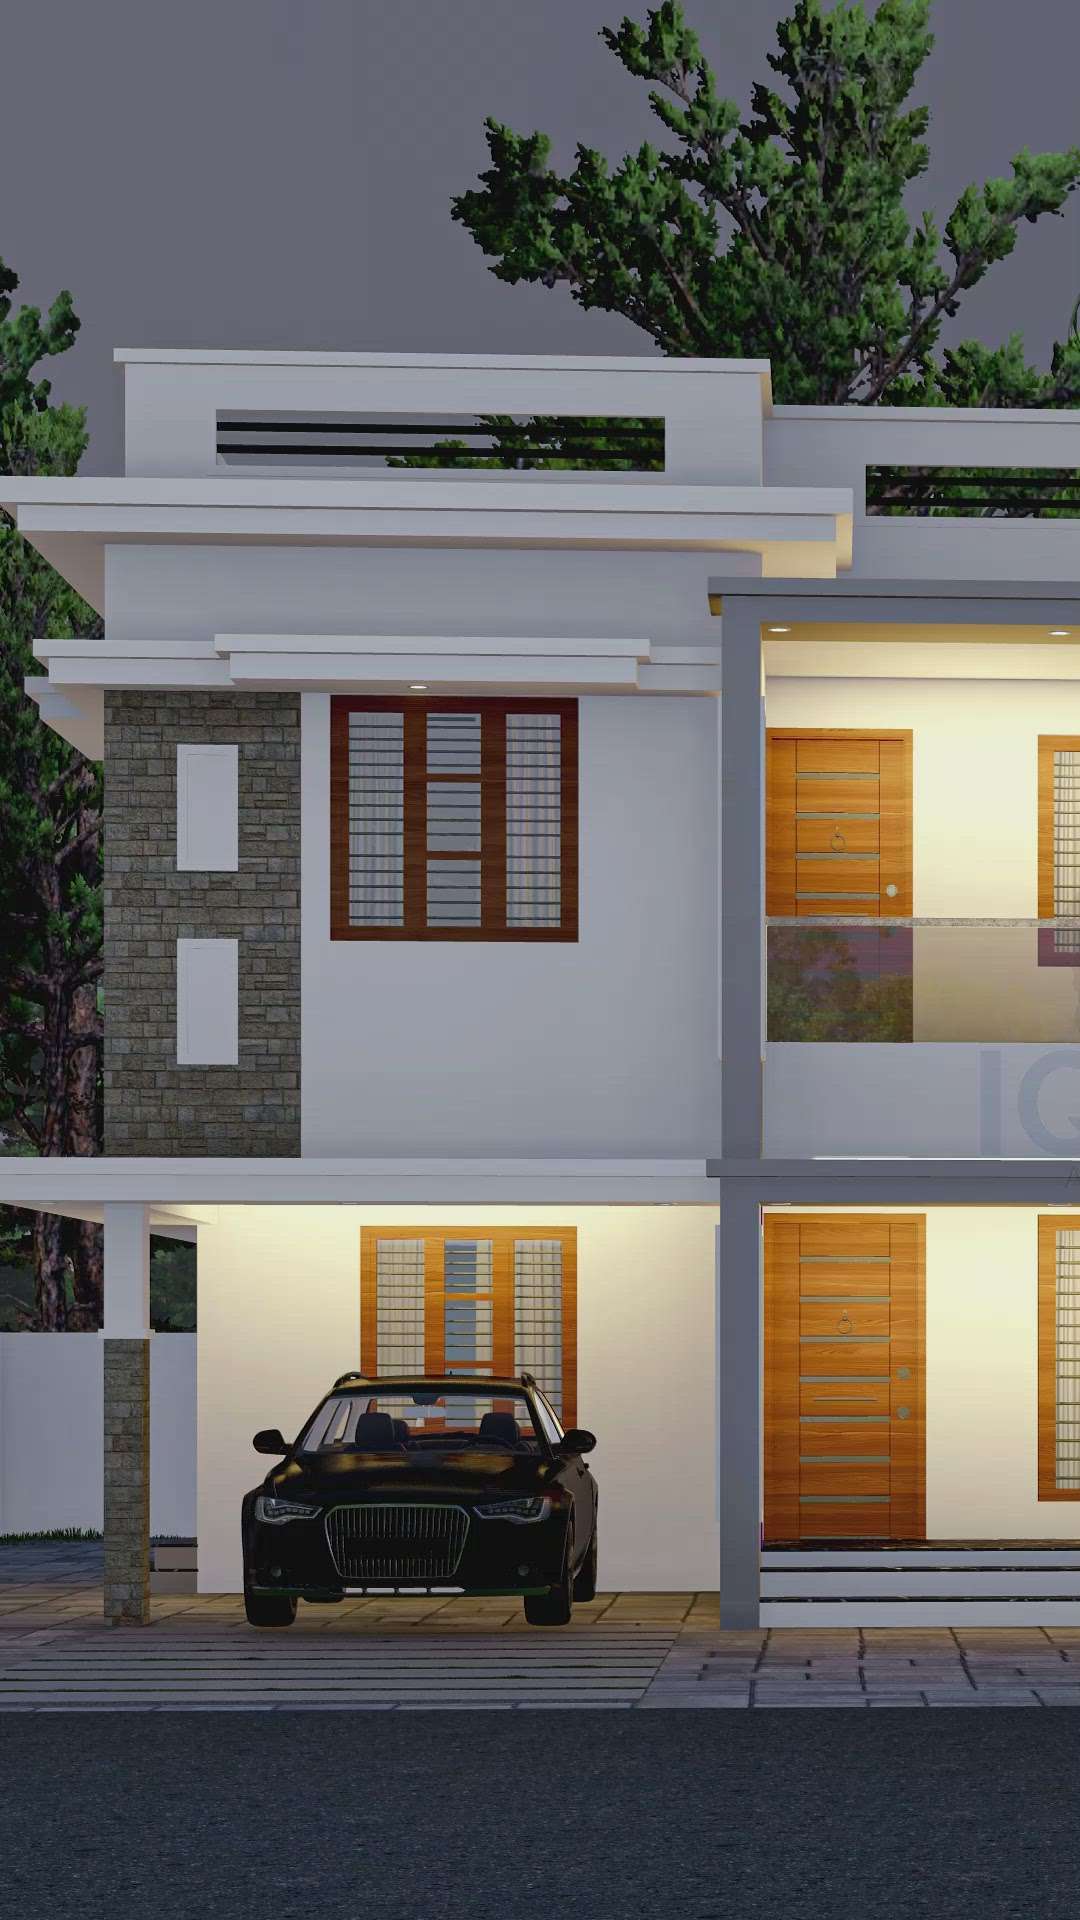 NEW 3D DESIGN 2500 sqft HOUSE
Contact Us +91 8848721023
#trivandrum #construction #home #designs #inetriordesigning #iqdesignshome #iqdesignsconstruction